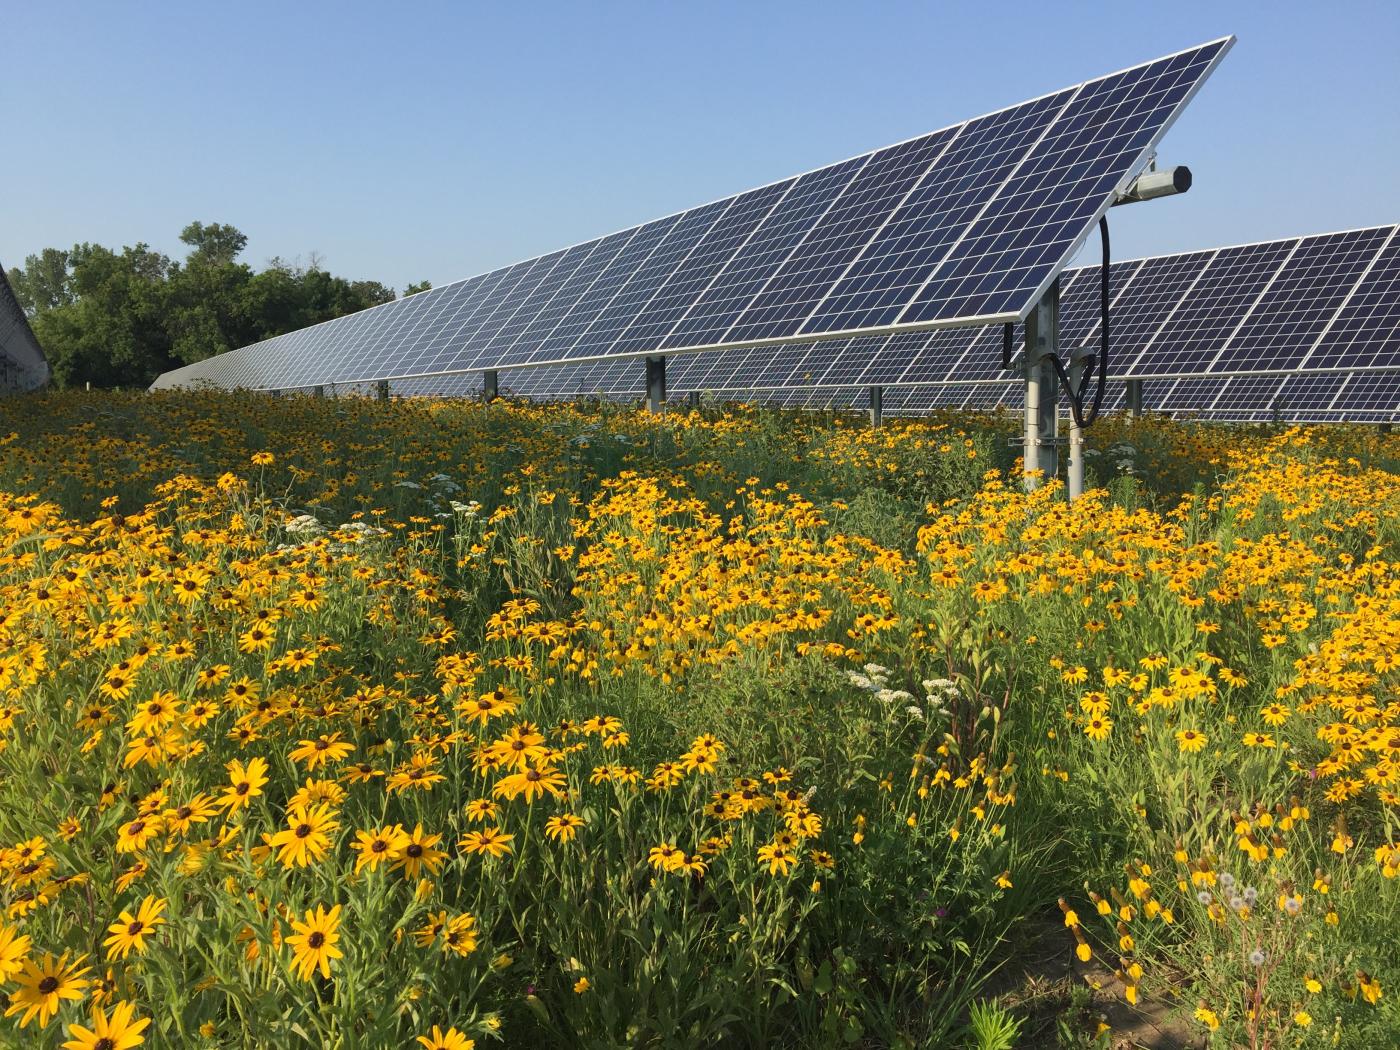 Minnesota community solar garden with pollinators, MnSEIA